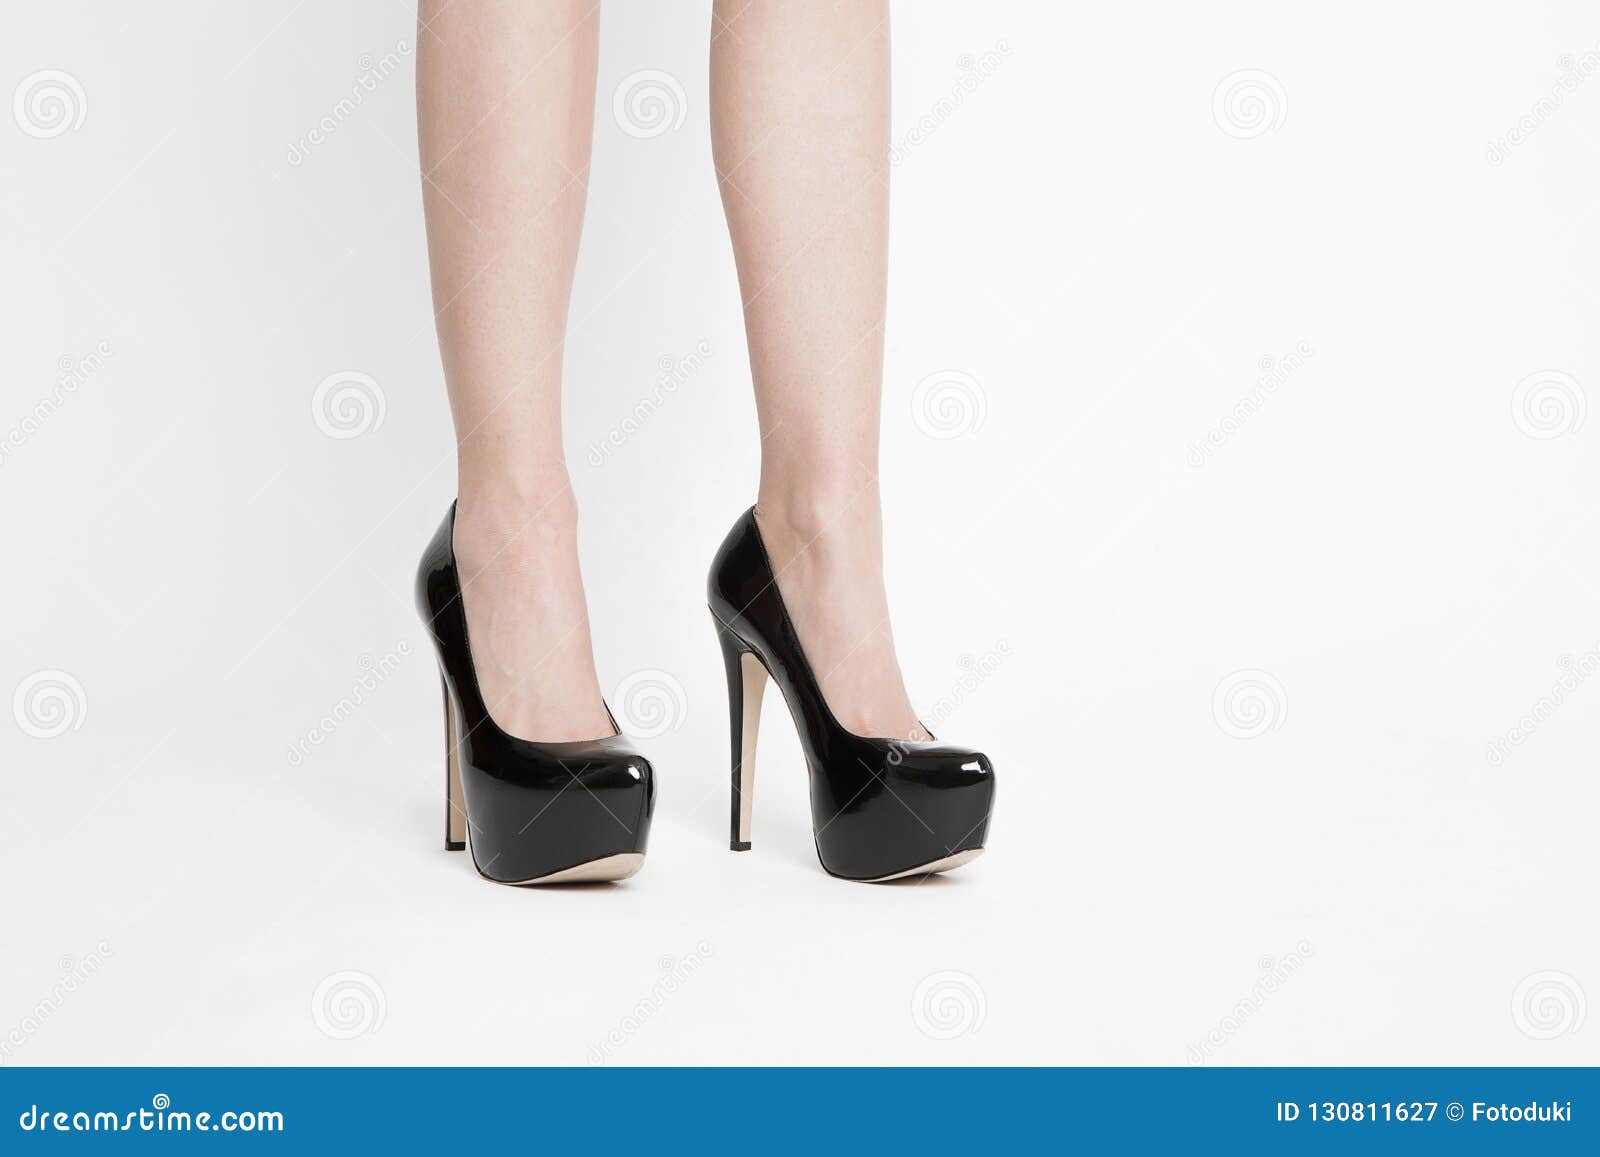 HSMQHJWE Womens Black Boots Cute High Heels For Women Open Toe Fashion  Women'S High Heels Sandals Shoes Breathable Lace-Up Casua Women'S High Heels  Designer High Heels For Women - Walmart.com